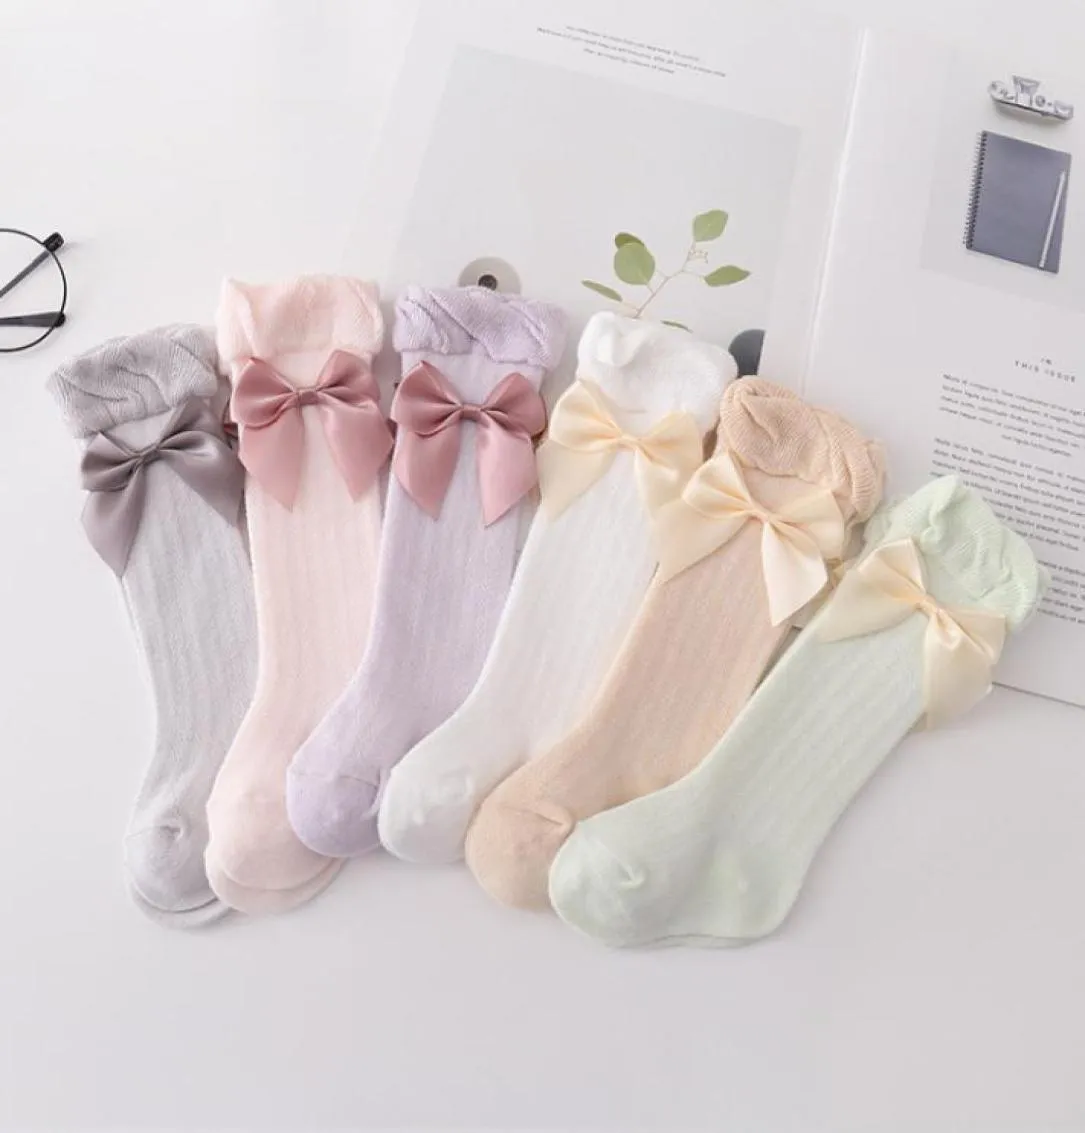 Baby hole socks little girls Bows 34 knee high ruffle sock infant kids cotton breathable legs A30498872682